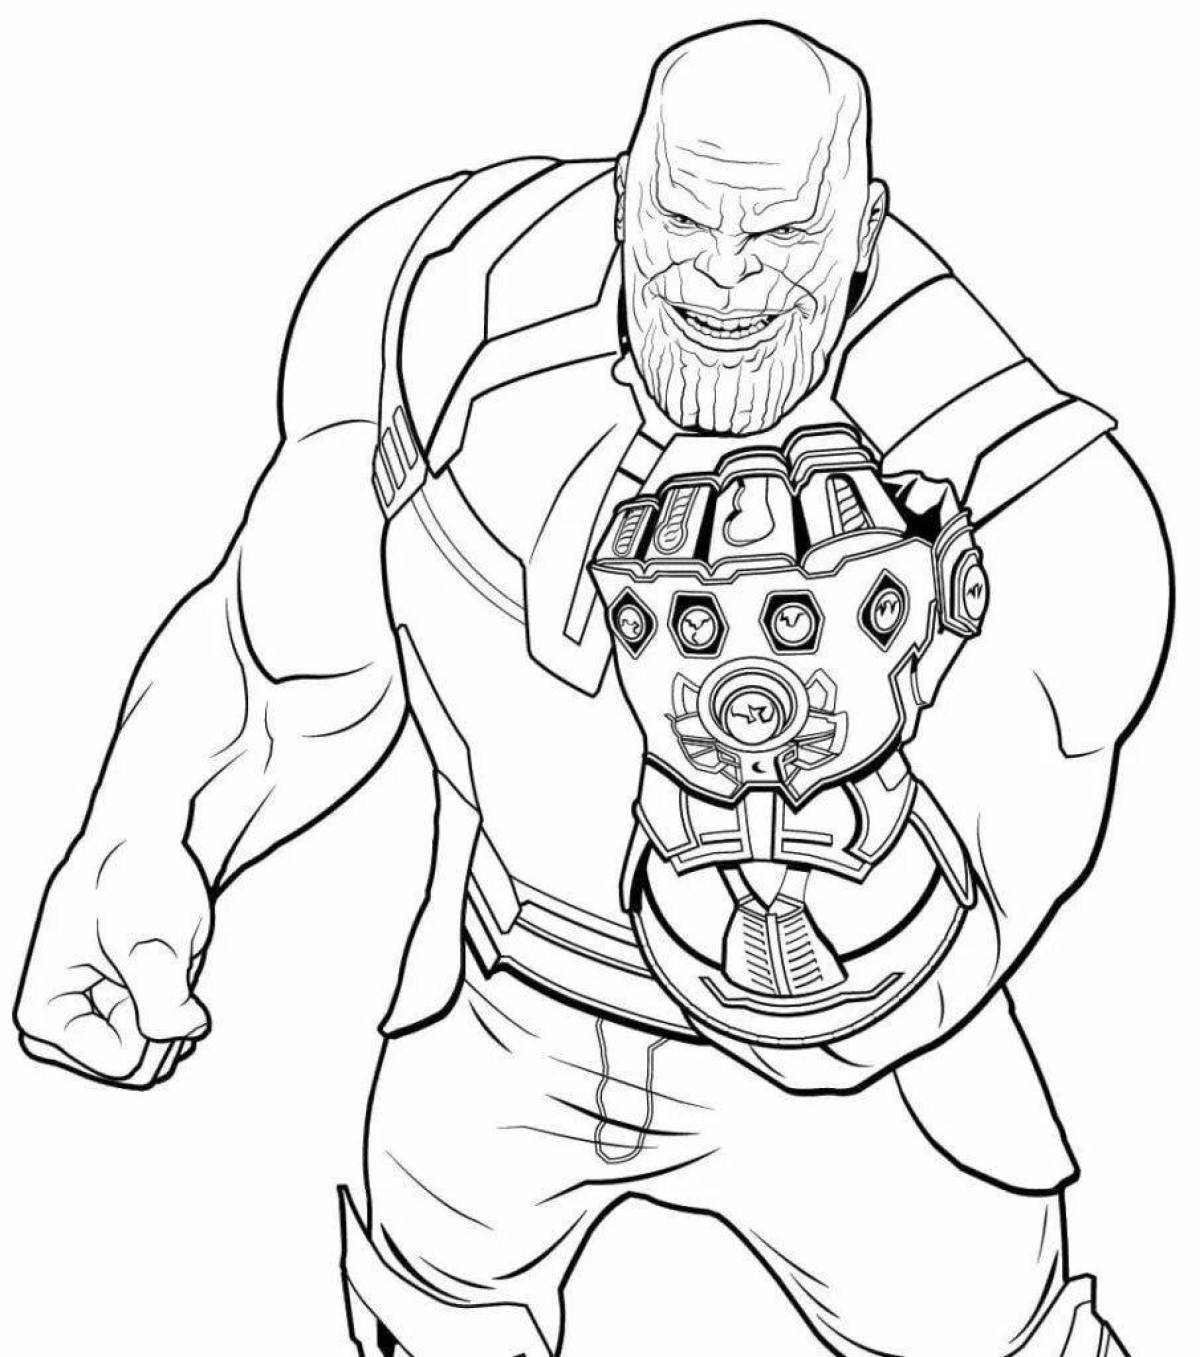 Thanos and Hulk #10